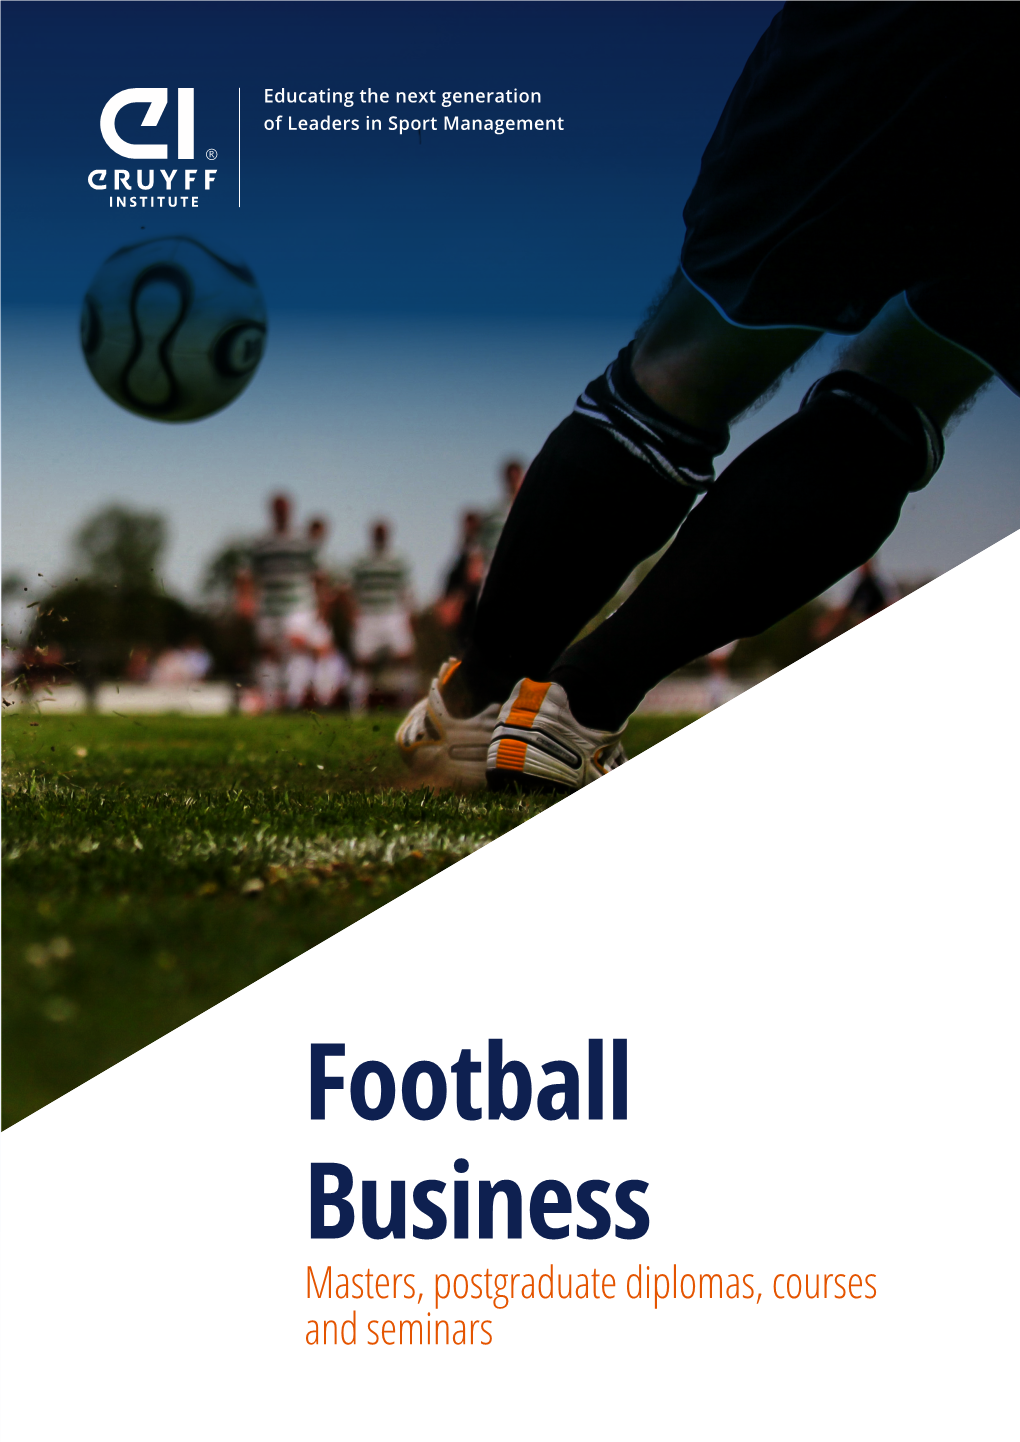 Football Business Brochure